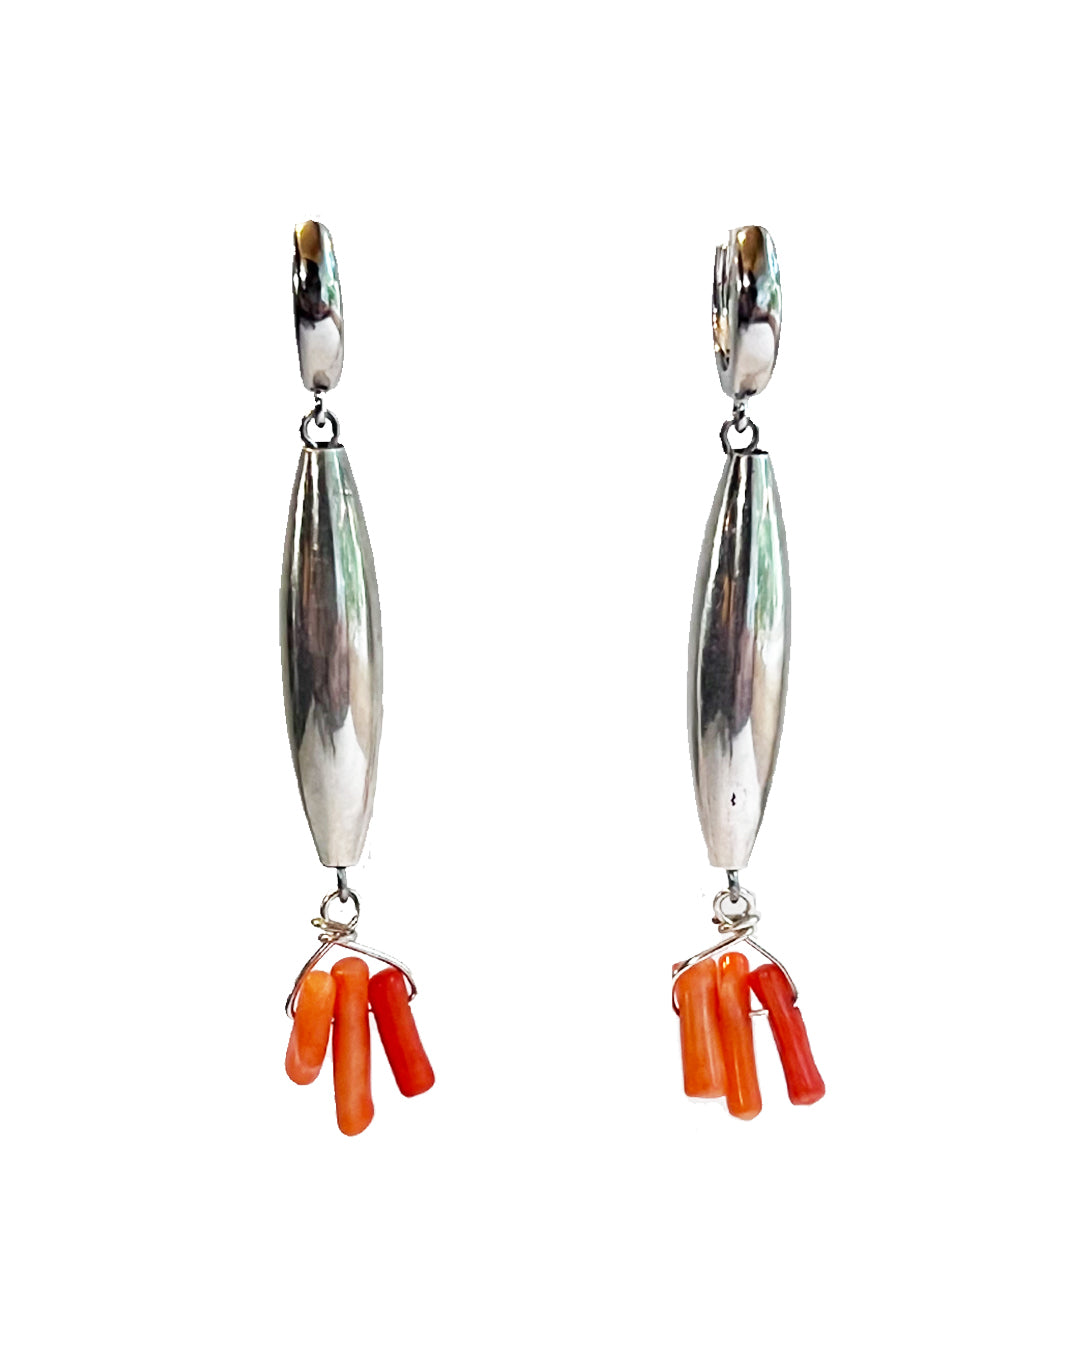 Semifine Sterling Silver Coraline Earrings | cukimber designs